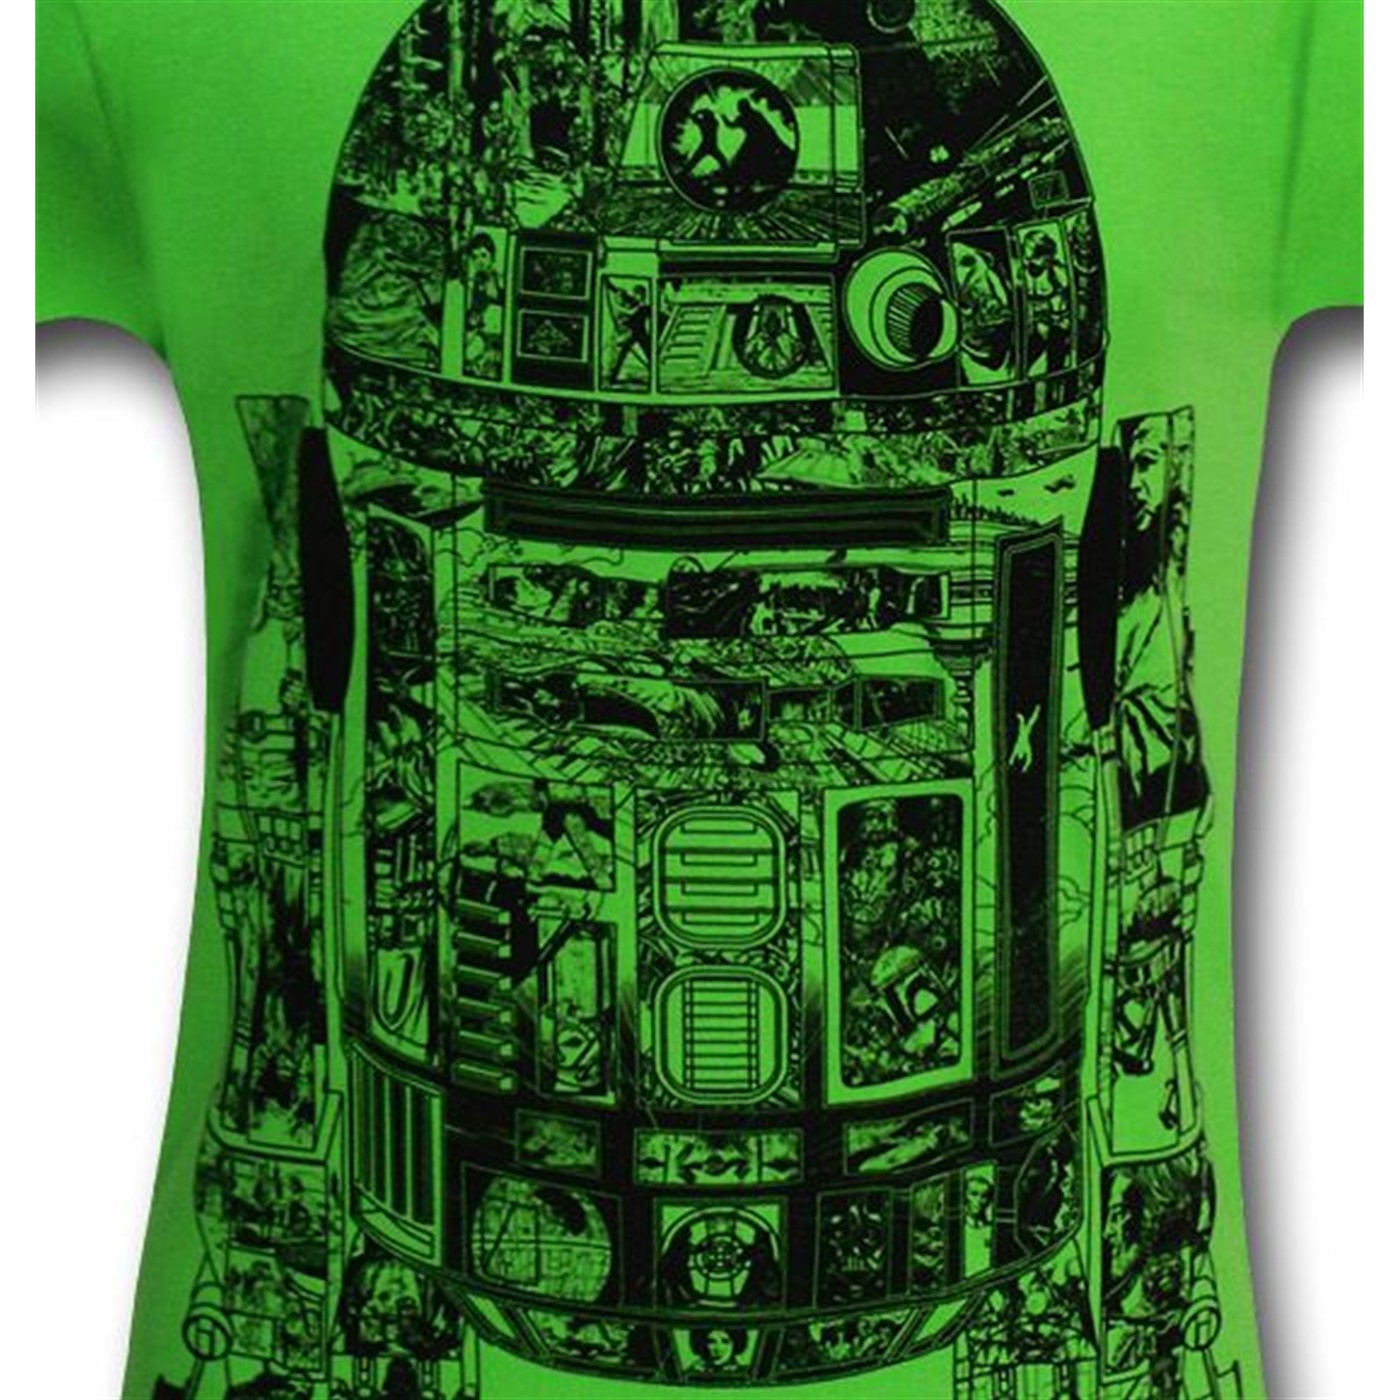 Star Wars R2D2 Green T-Shirt